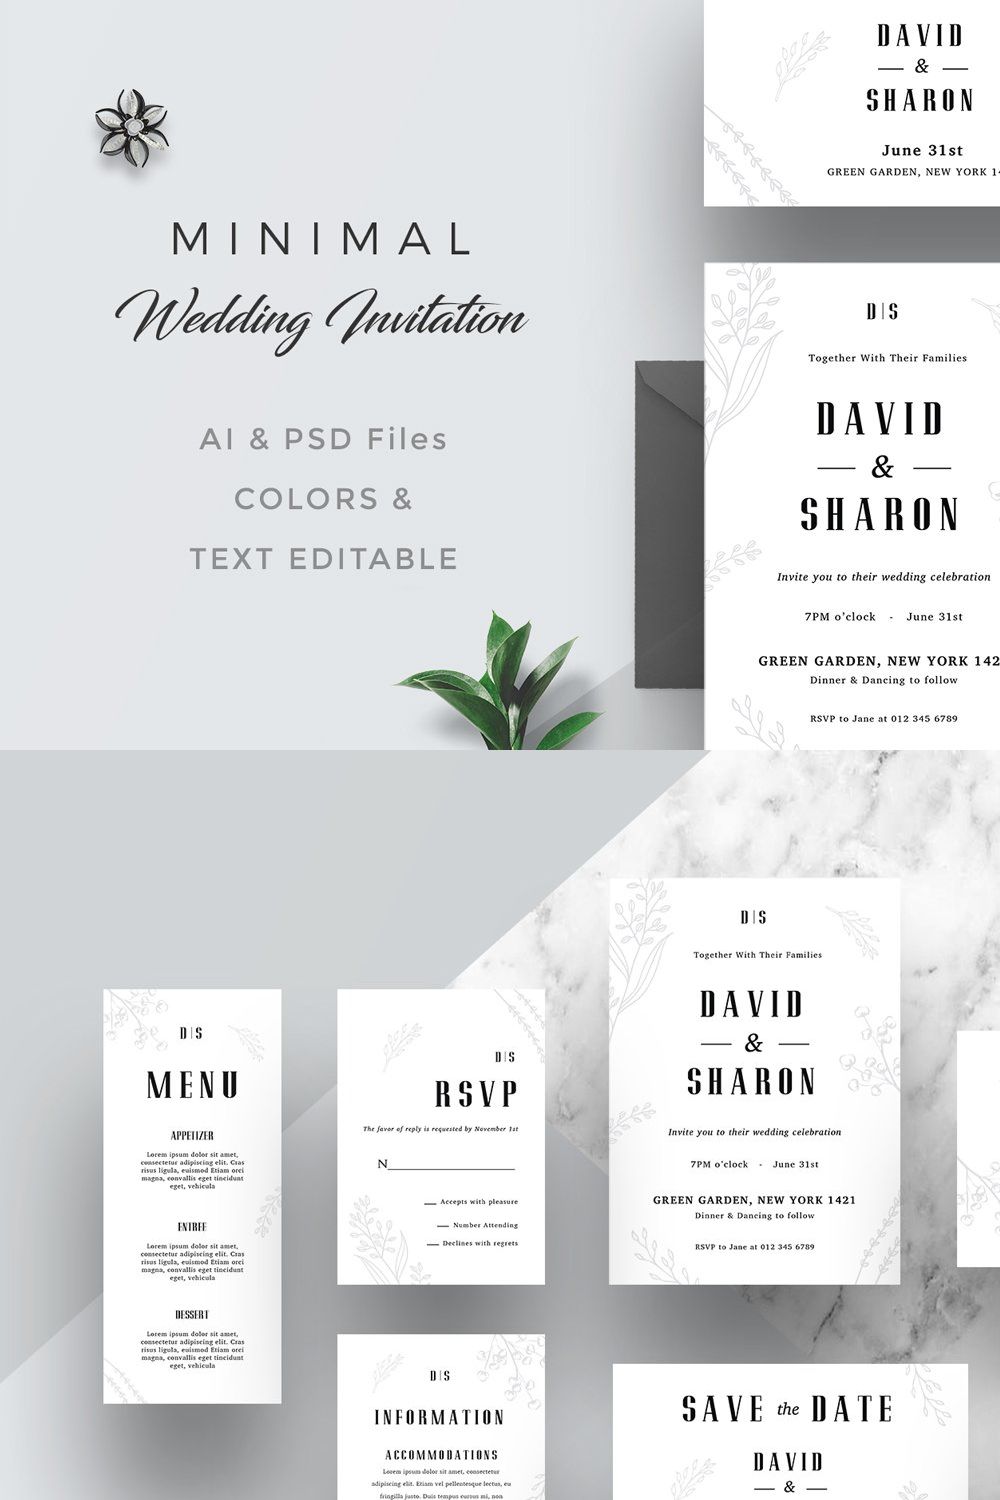 Minimal Wedding Invitation Suite pinterest preview image.